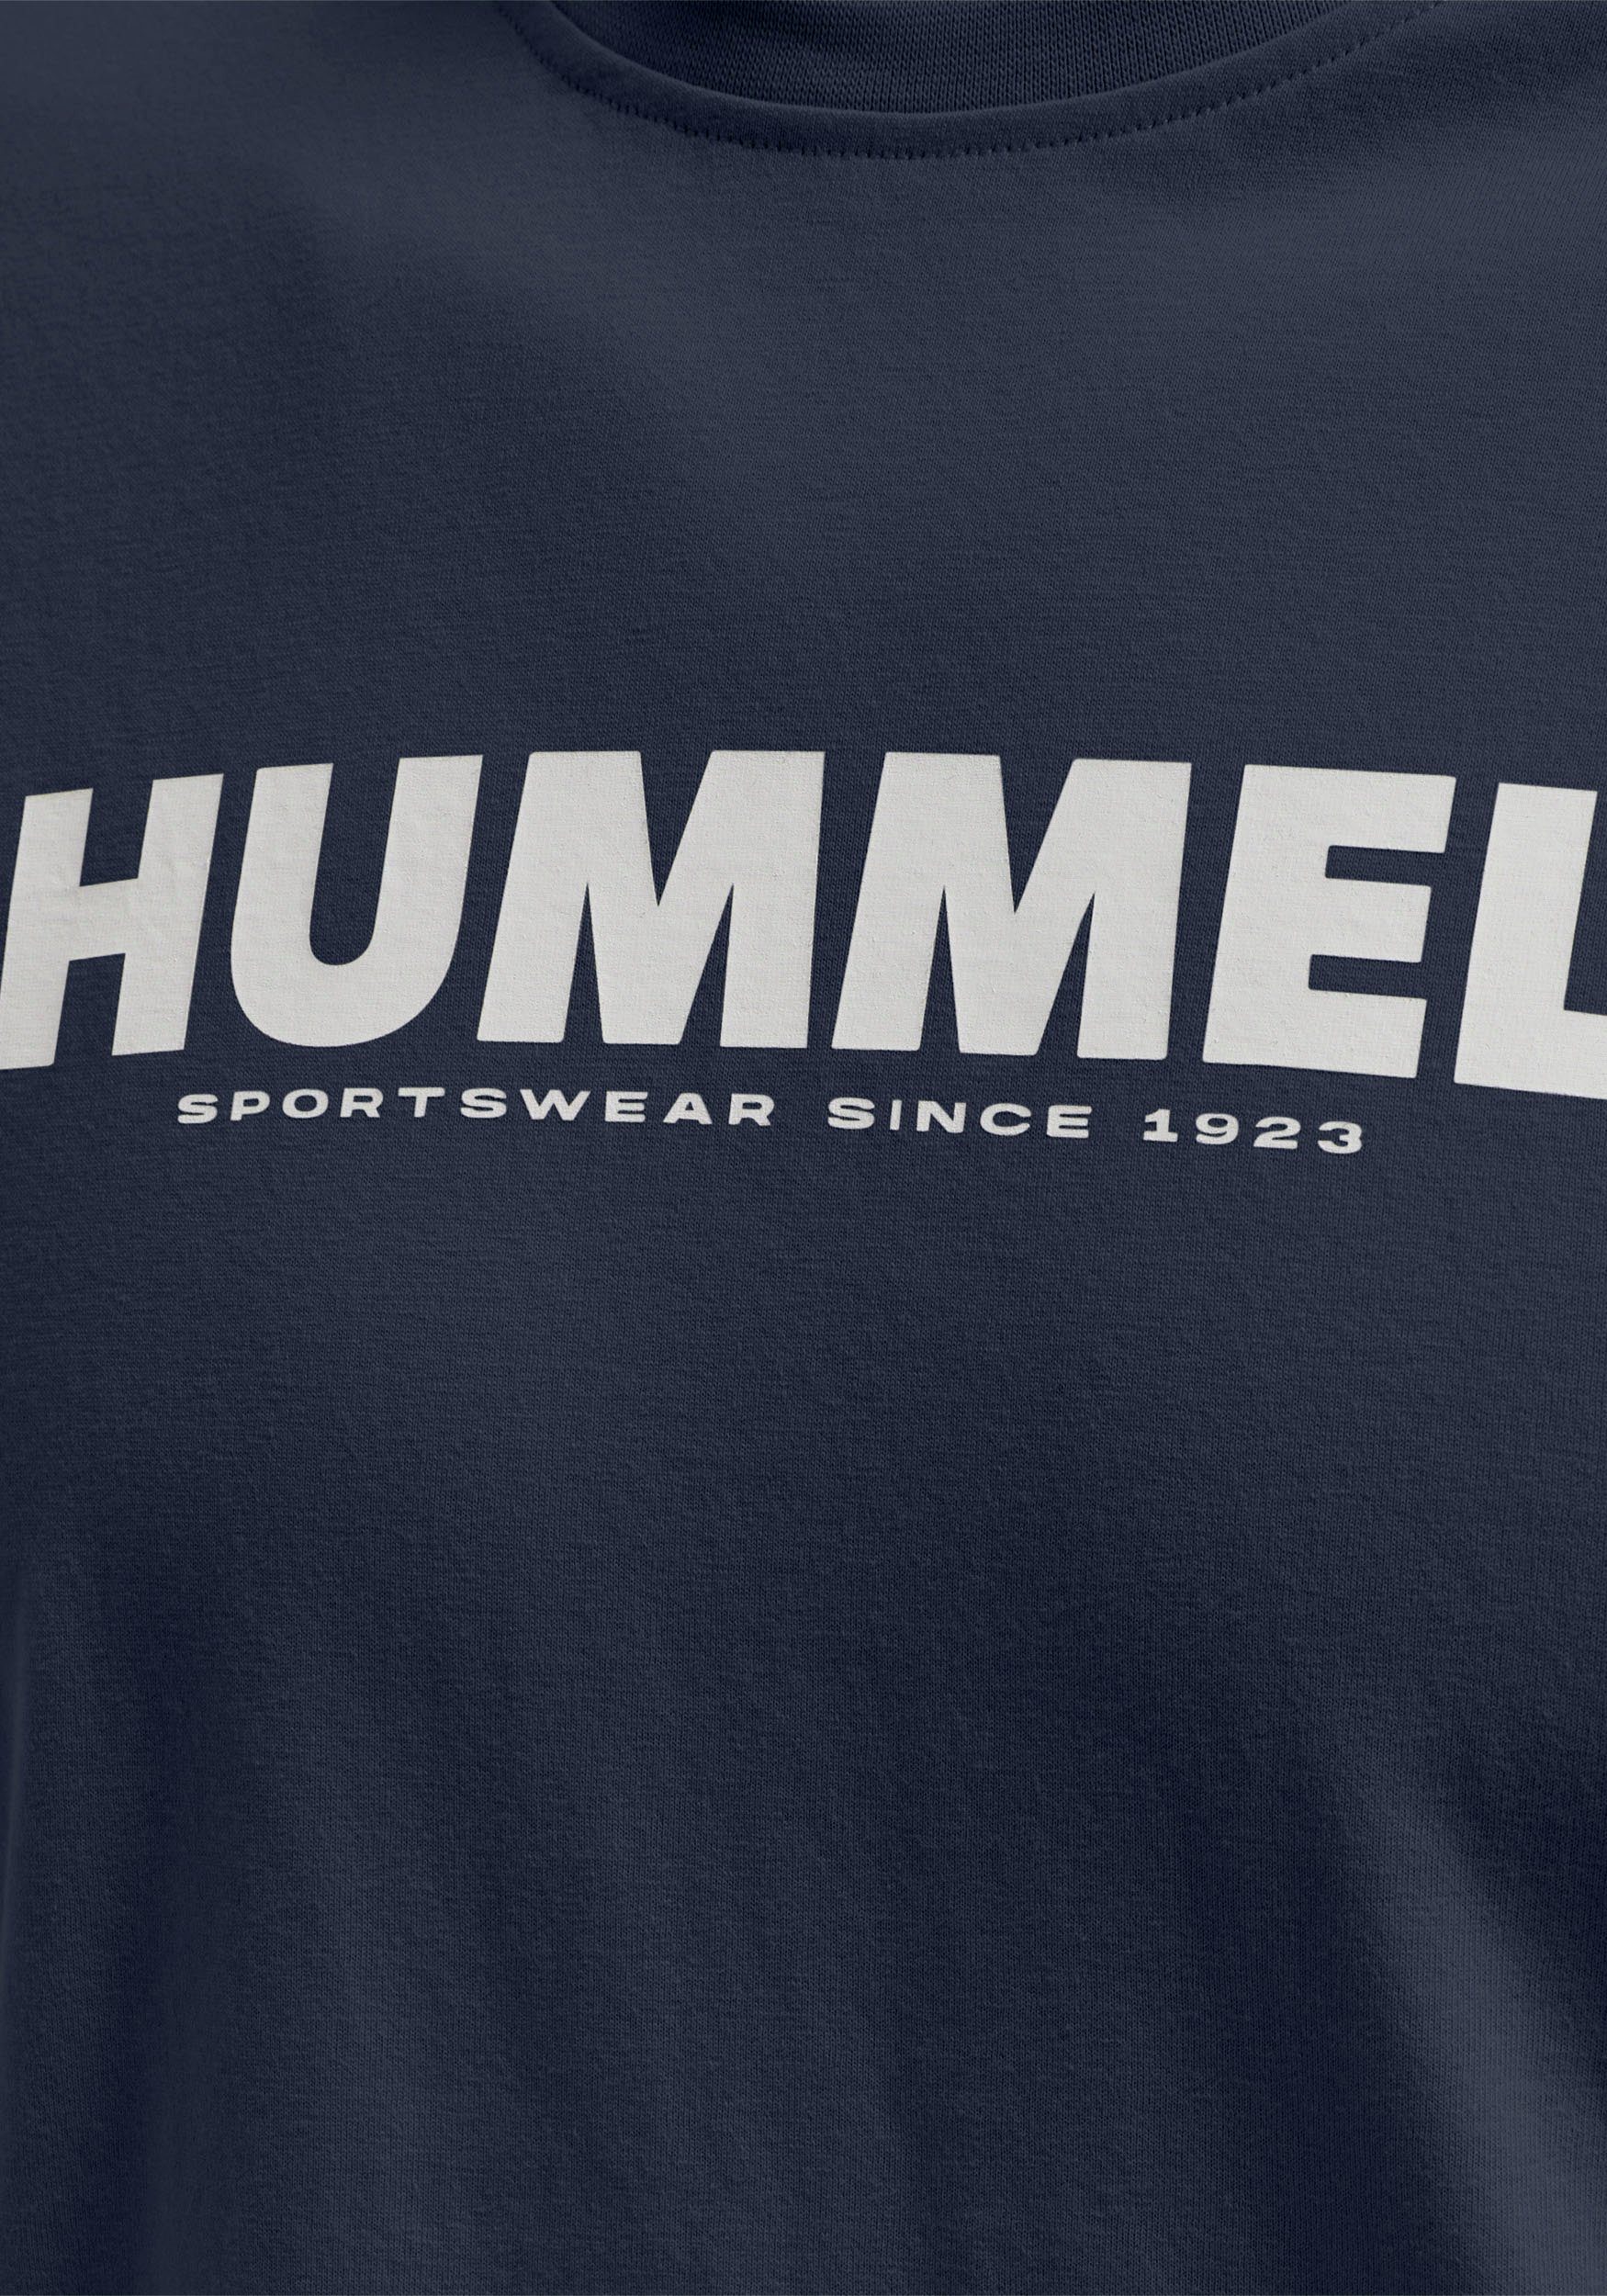 mit Logo T-Shirt marine Print hummel